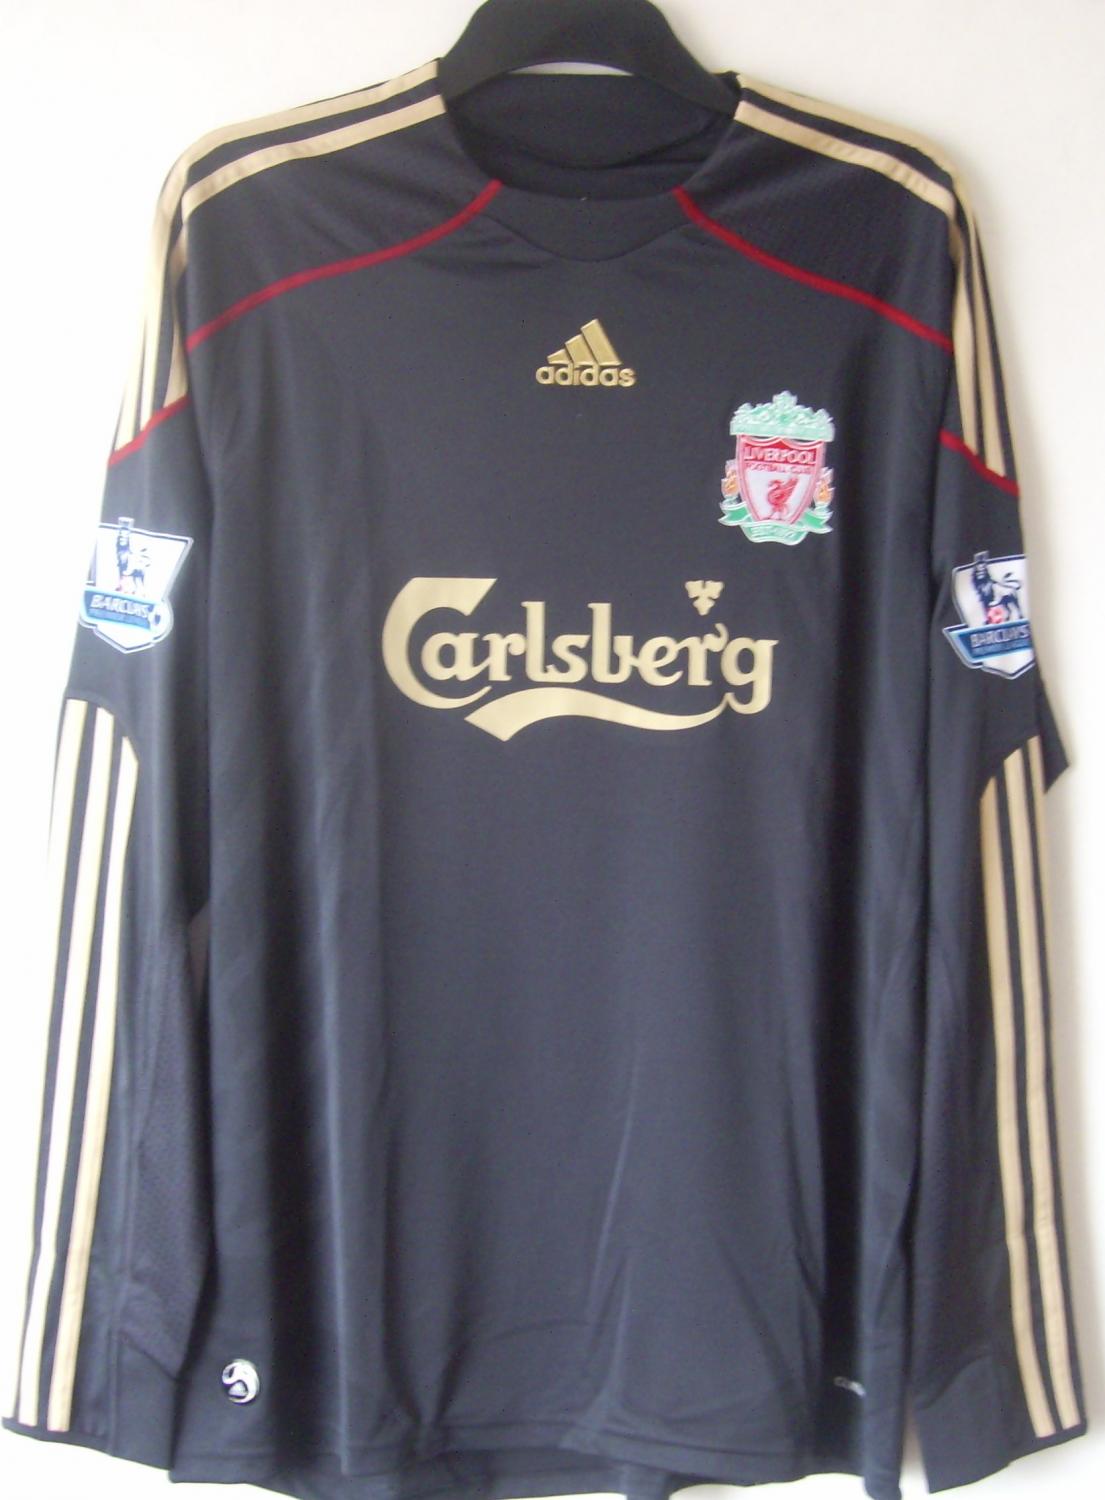 Liverpool Away football shirt 2009 - 2010. Sponsored by Carlsberg